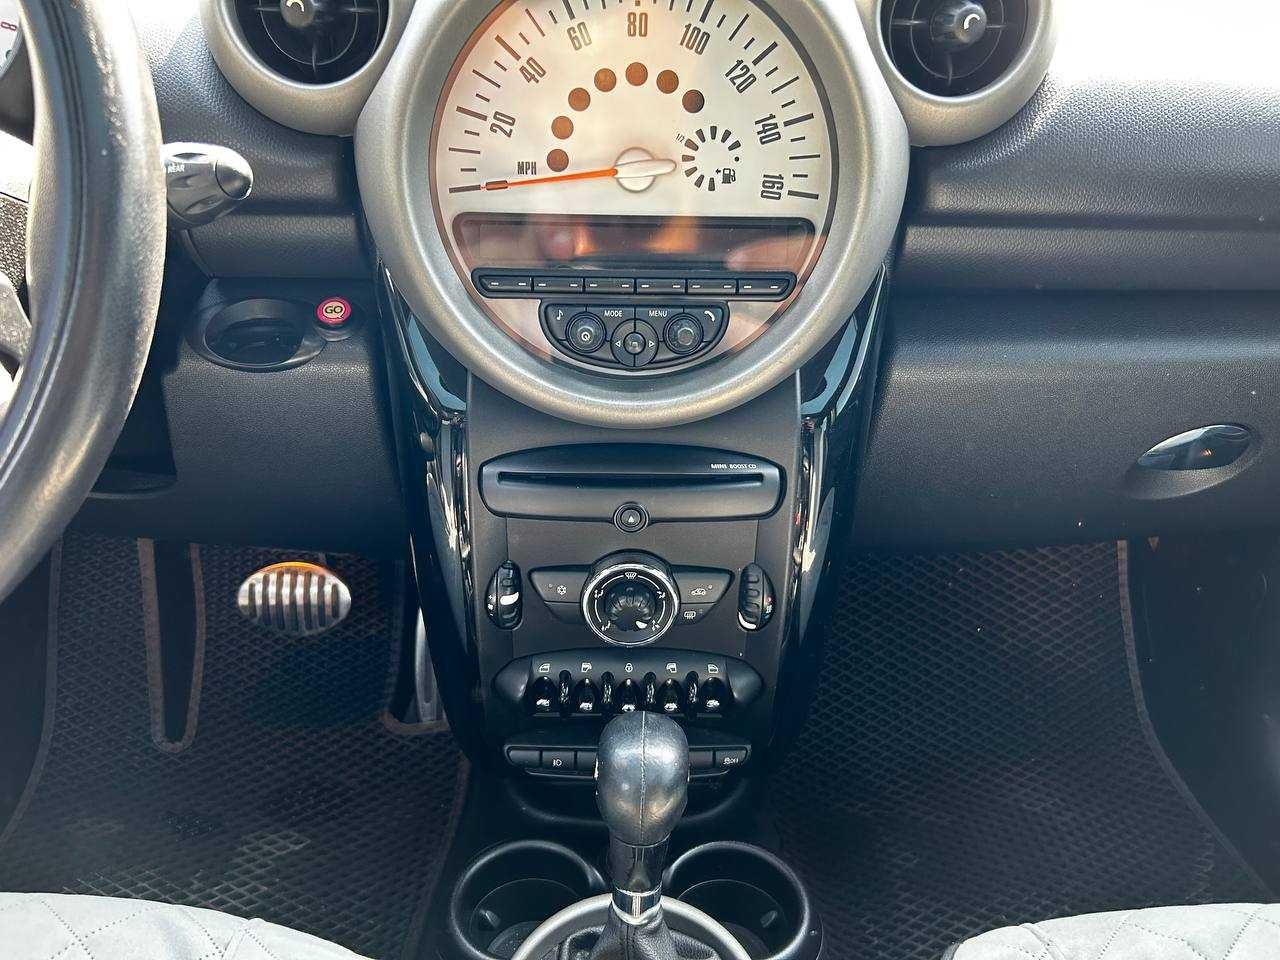 Авто Mini Cooper S 2011рік, 1.6 бензин,обм, [Перший внесок 20%]